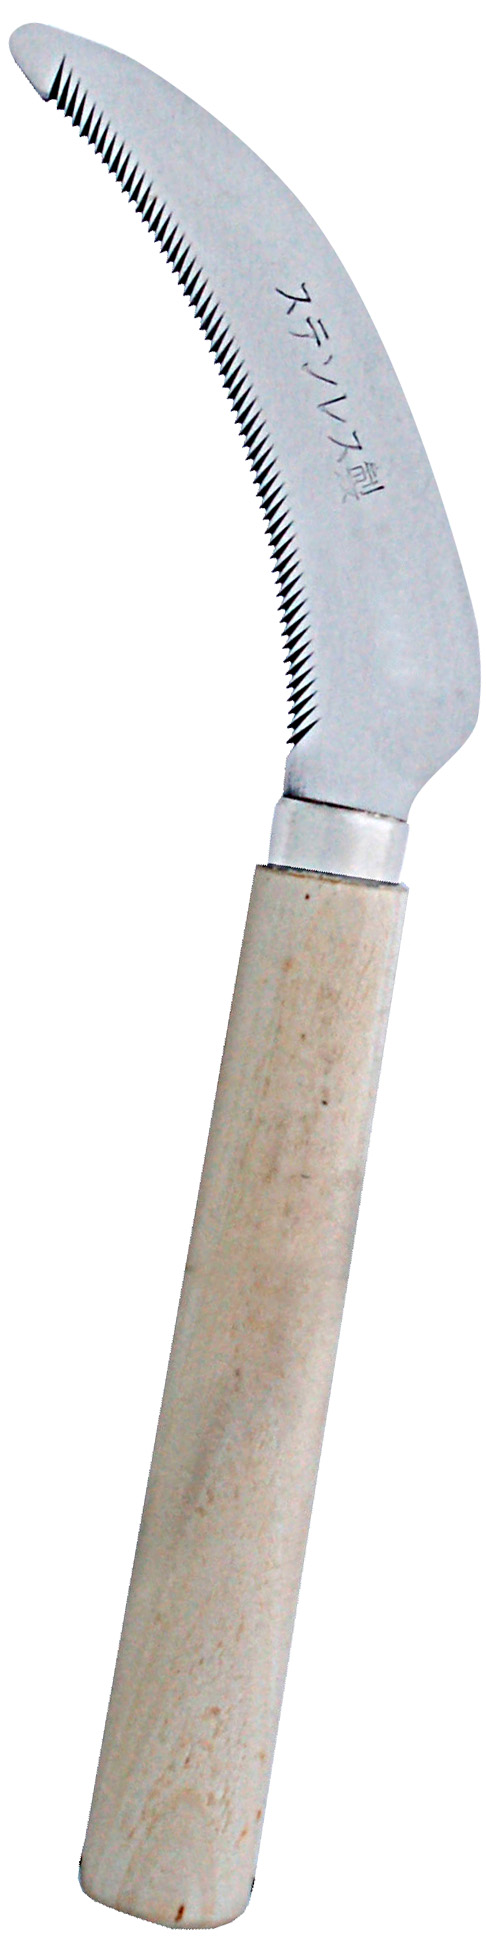 Zenport Sickle K206B3 Berry Knife/Weeding Sickle, Wood Handle, A+ Grade, Stainless Steel, Deep Serration, 3-Inch Blade